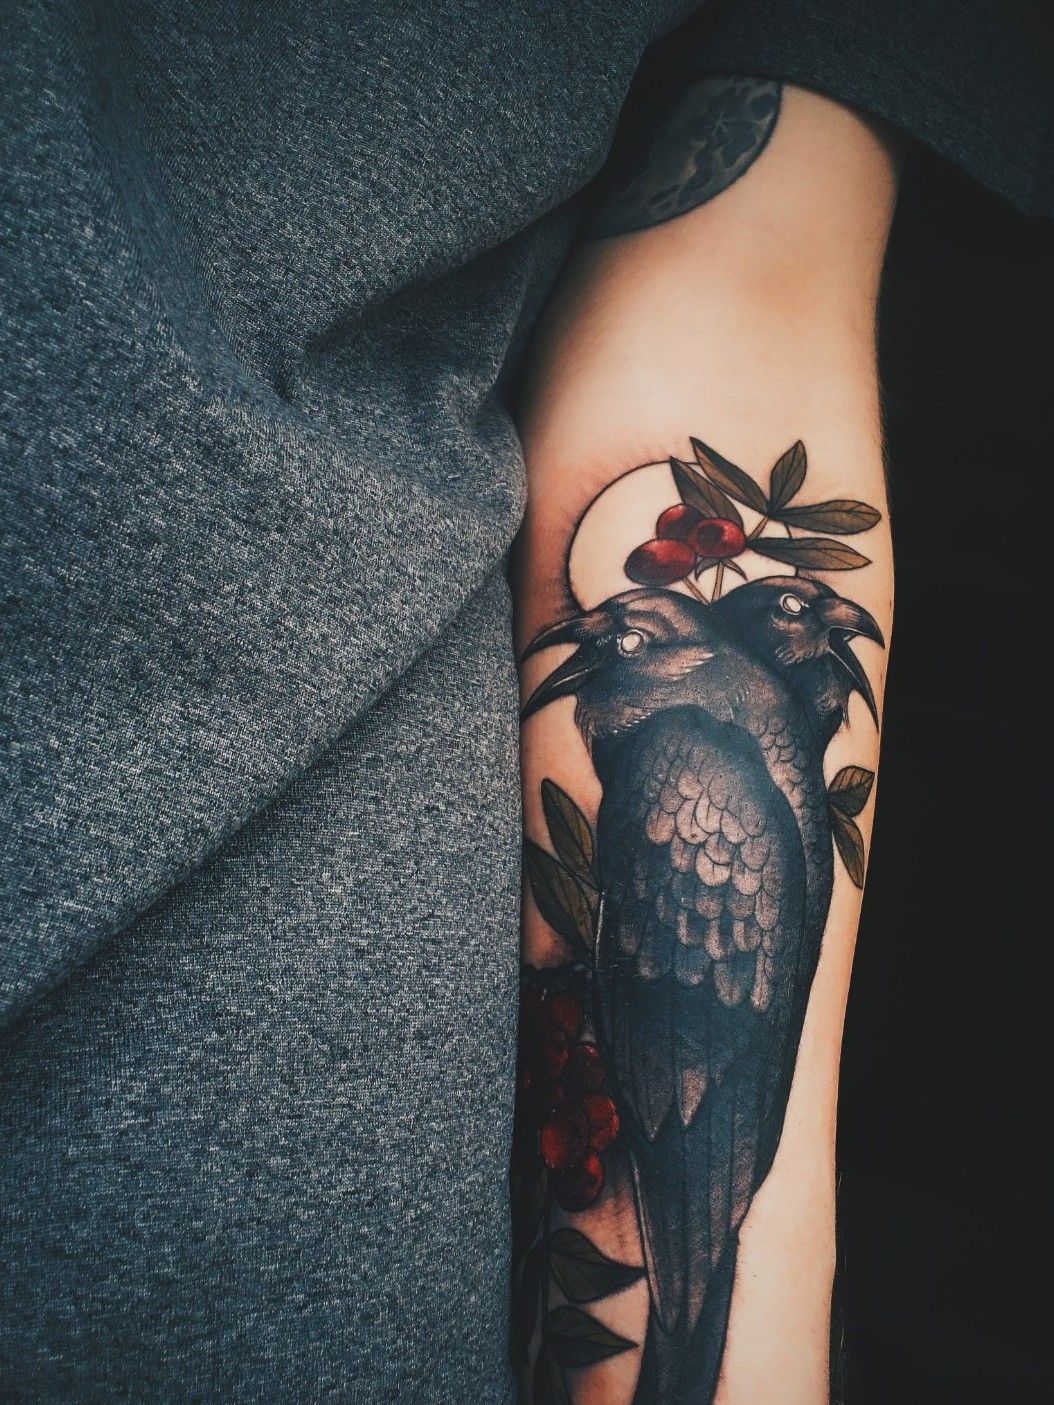 My Huginn  Muninn done by Isa at Hannya Tattoo in Brussels Belgium  r tattoos